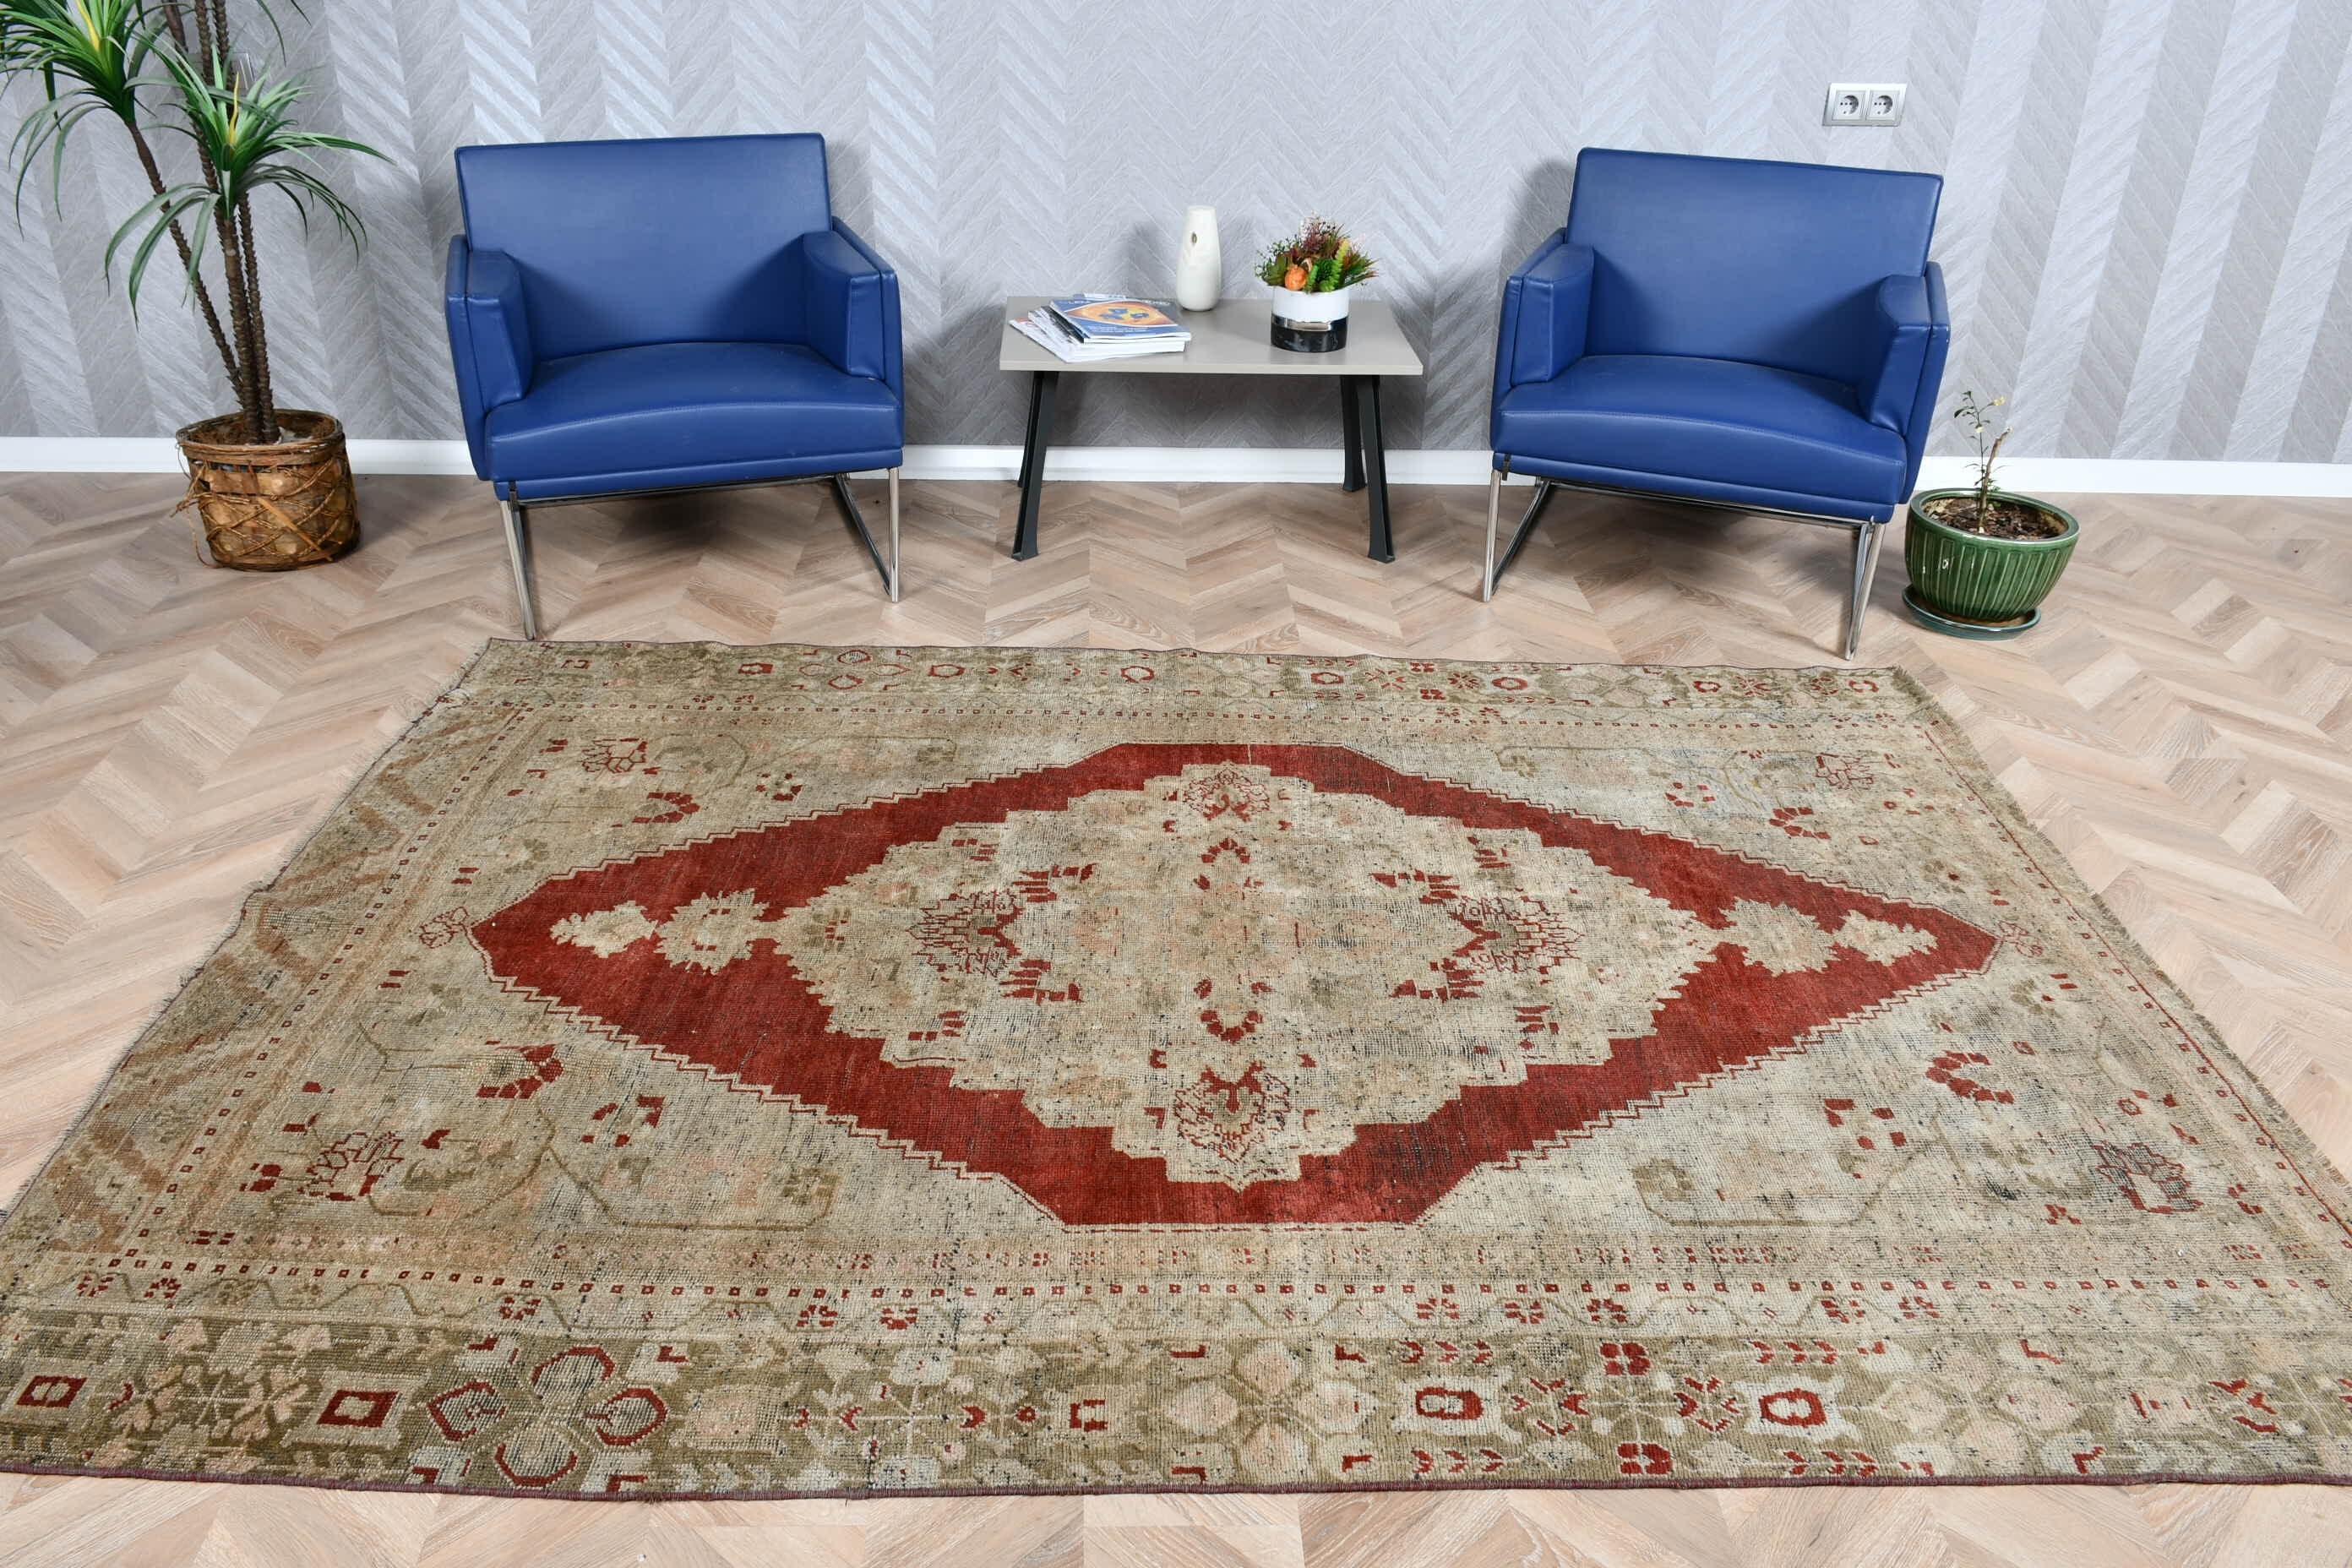 Art Rug, Vintage Rug, Gray Kitchen Rugs, Turkish Rugs, 5.9x8.4 ft Large Rug, Living Room Rug, Dining Room Rug, Anatolian Rug